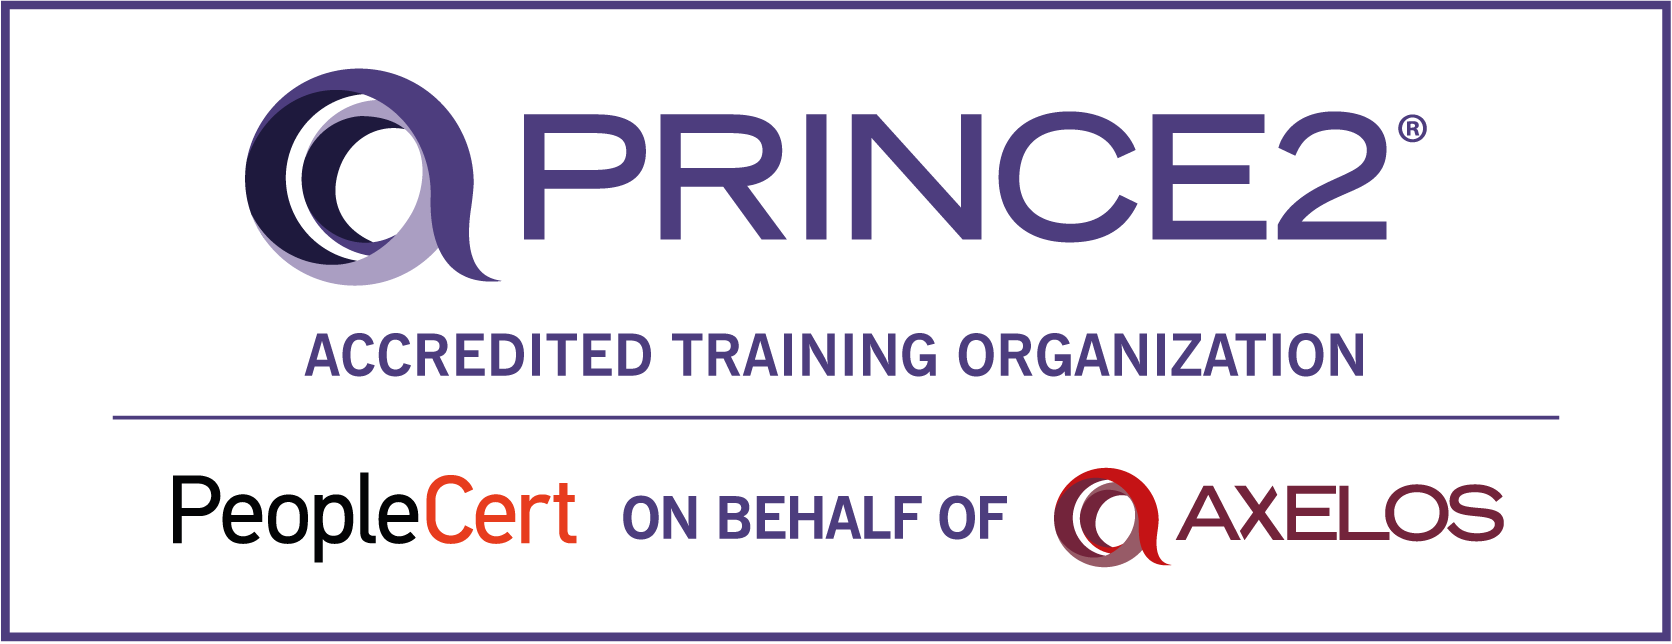 méthode prince2 formation prince2 certification prince2 prince2 certification